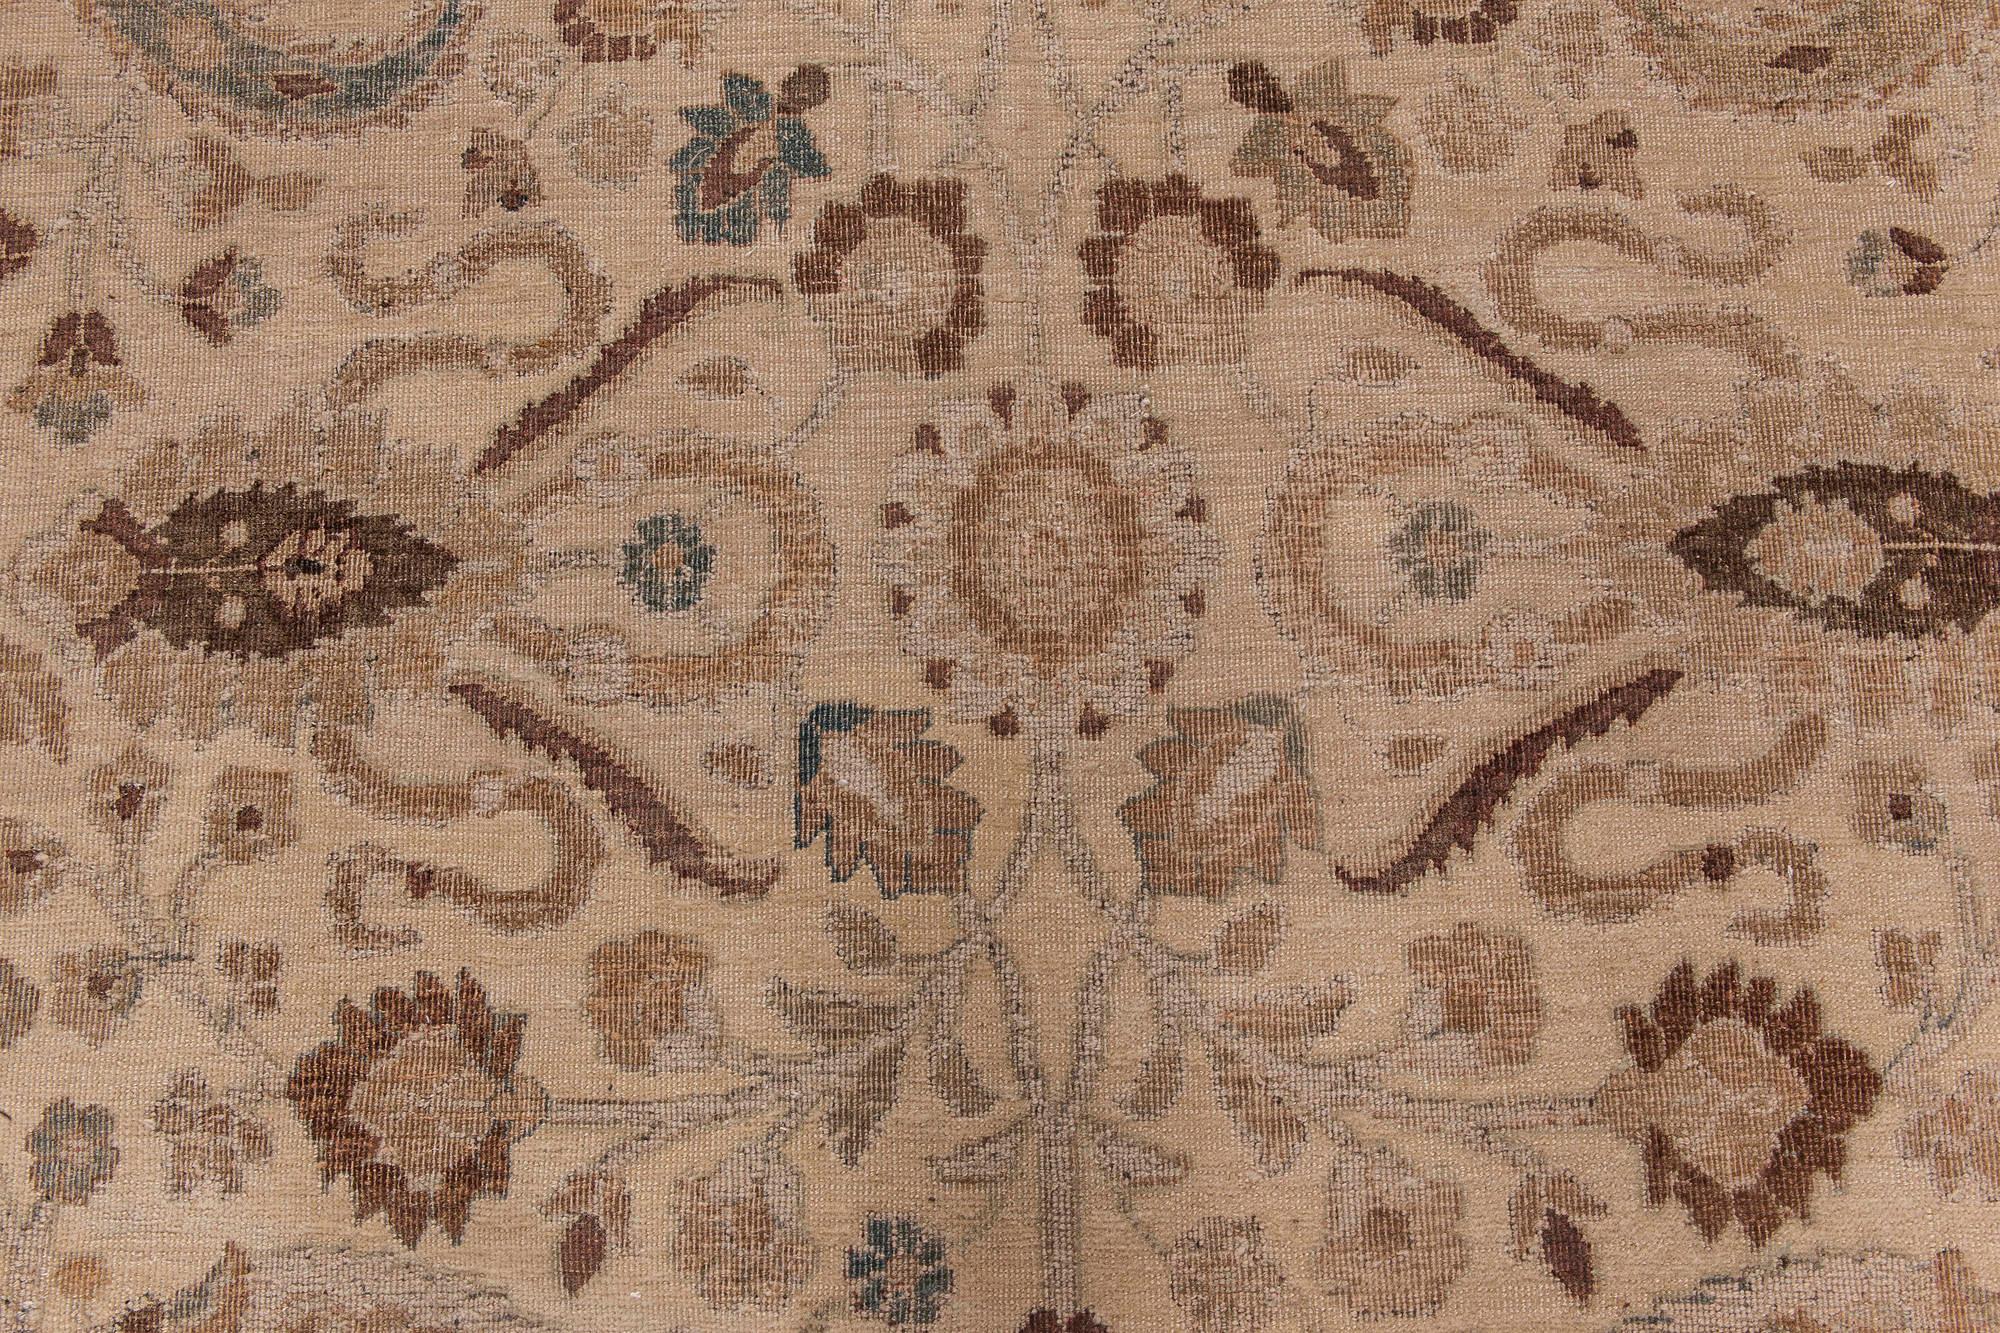 Antique Persian Khorassan handmade wool rug
Size: 13'7